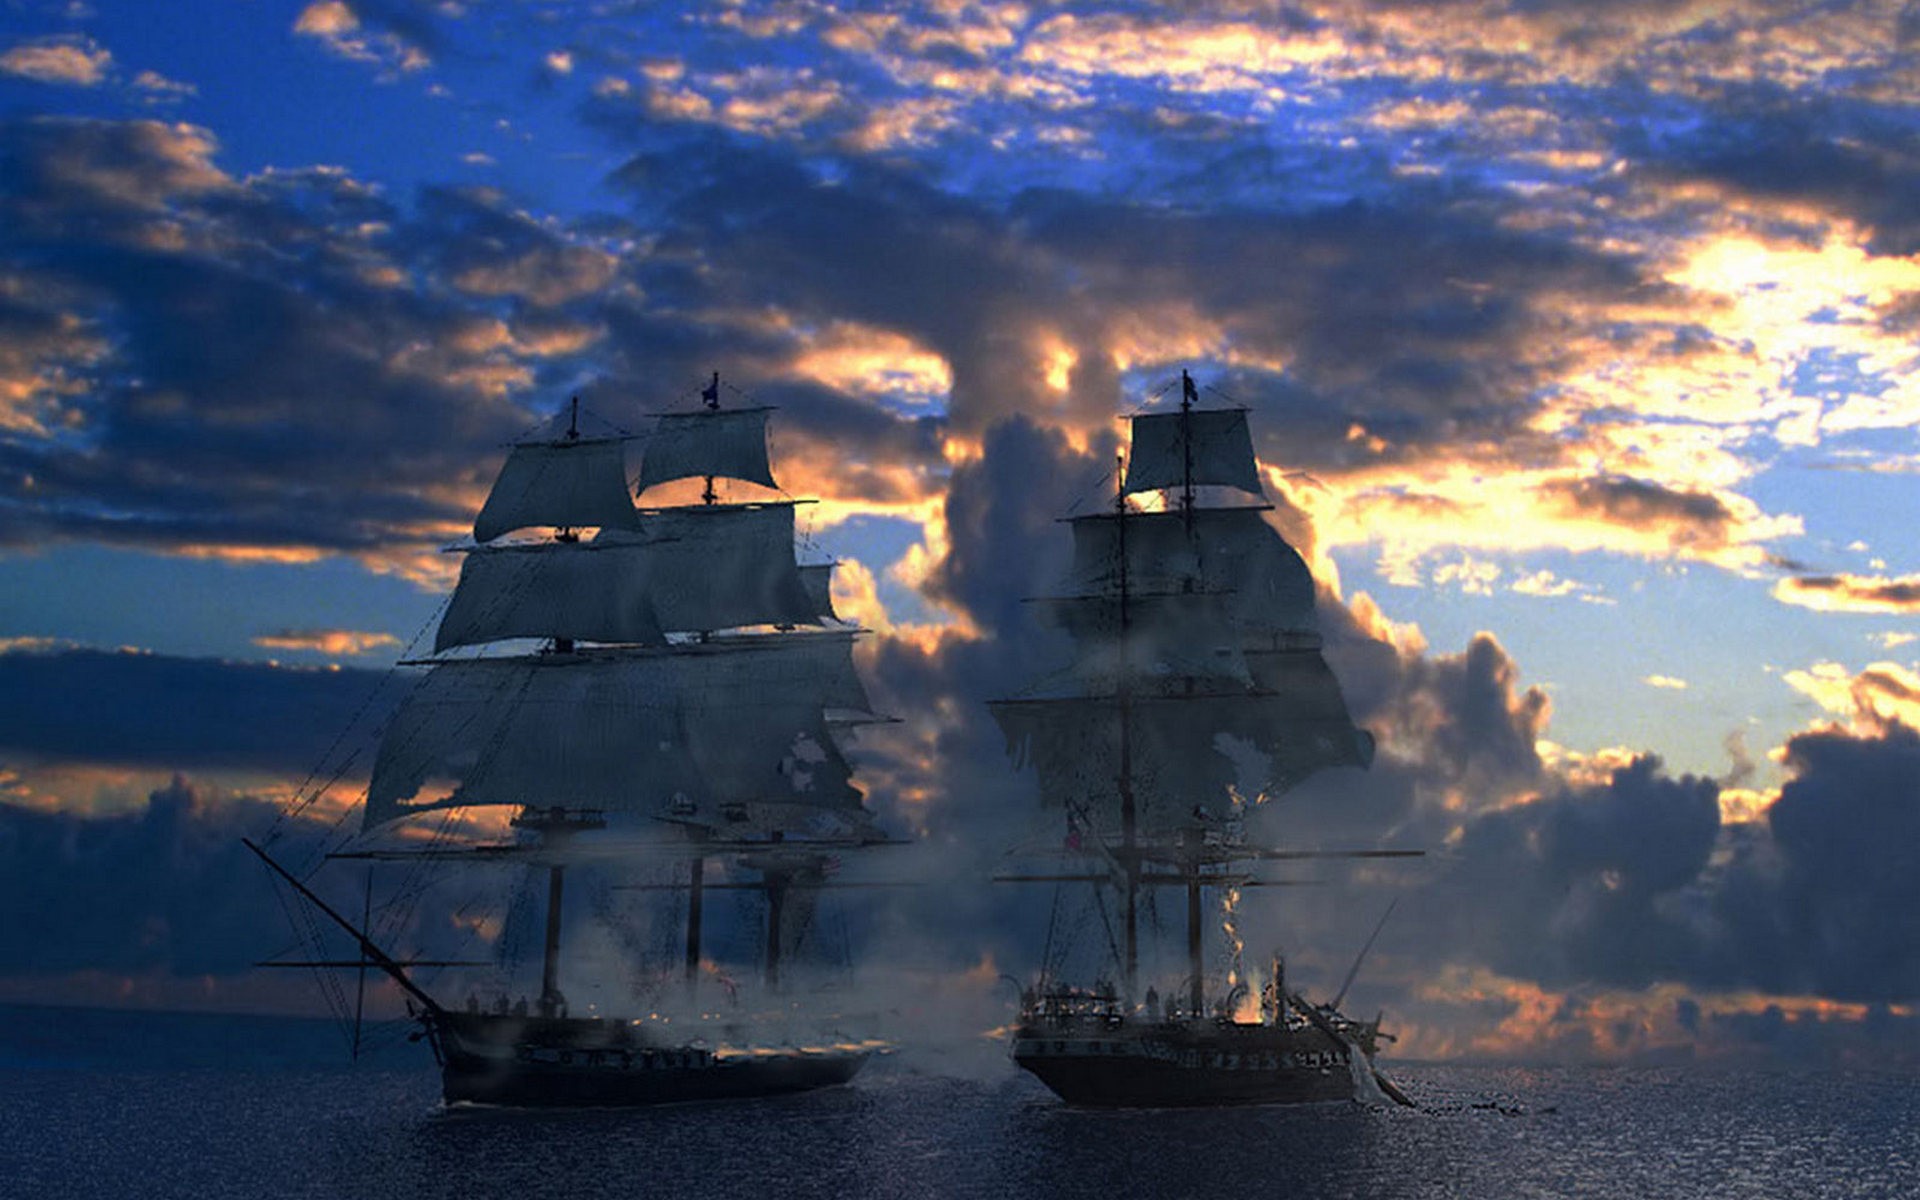 ships, battles, sail ship, sails - desktop wallpaper